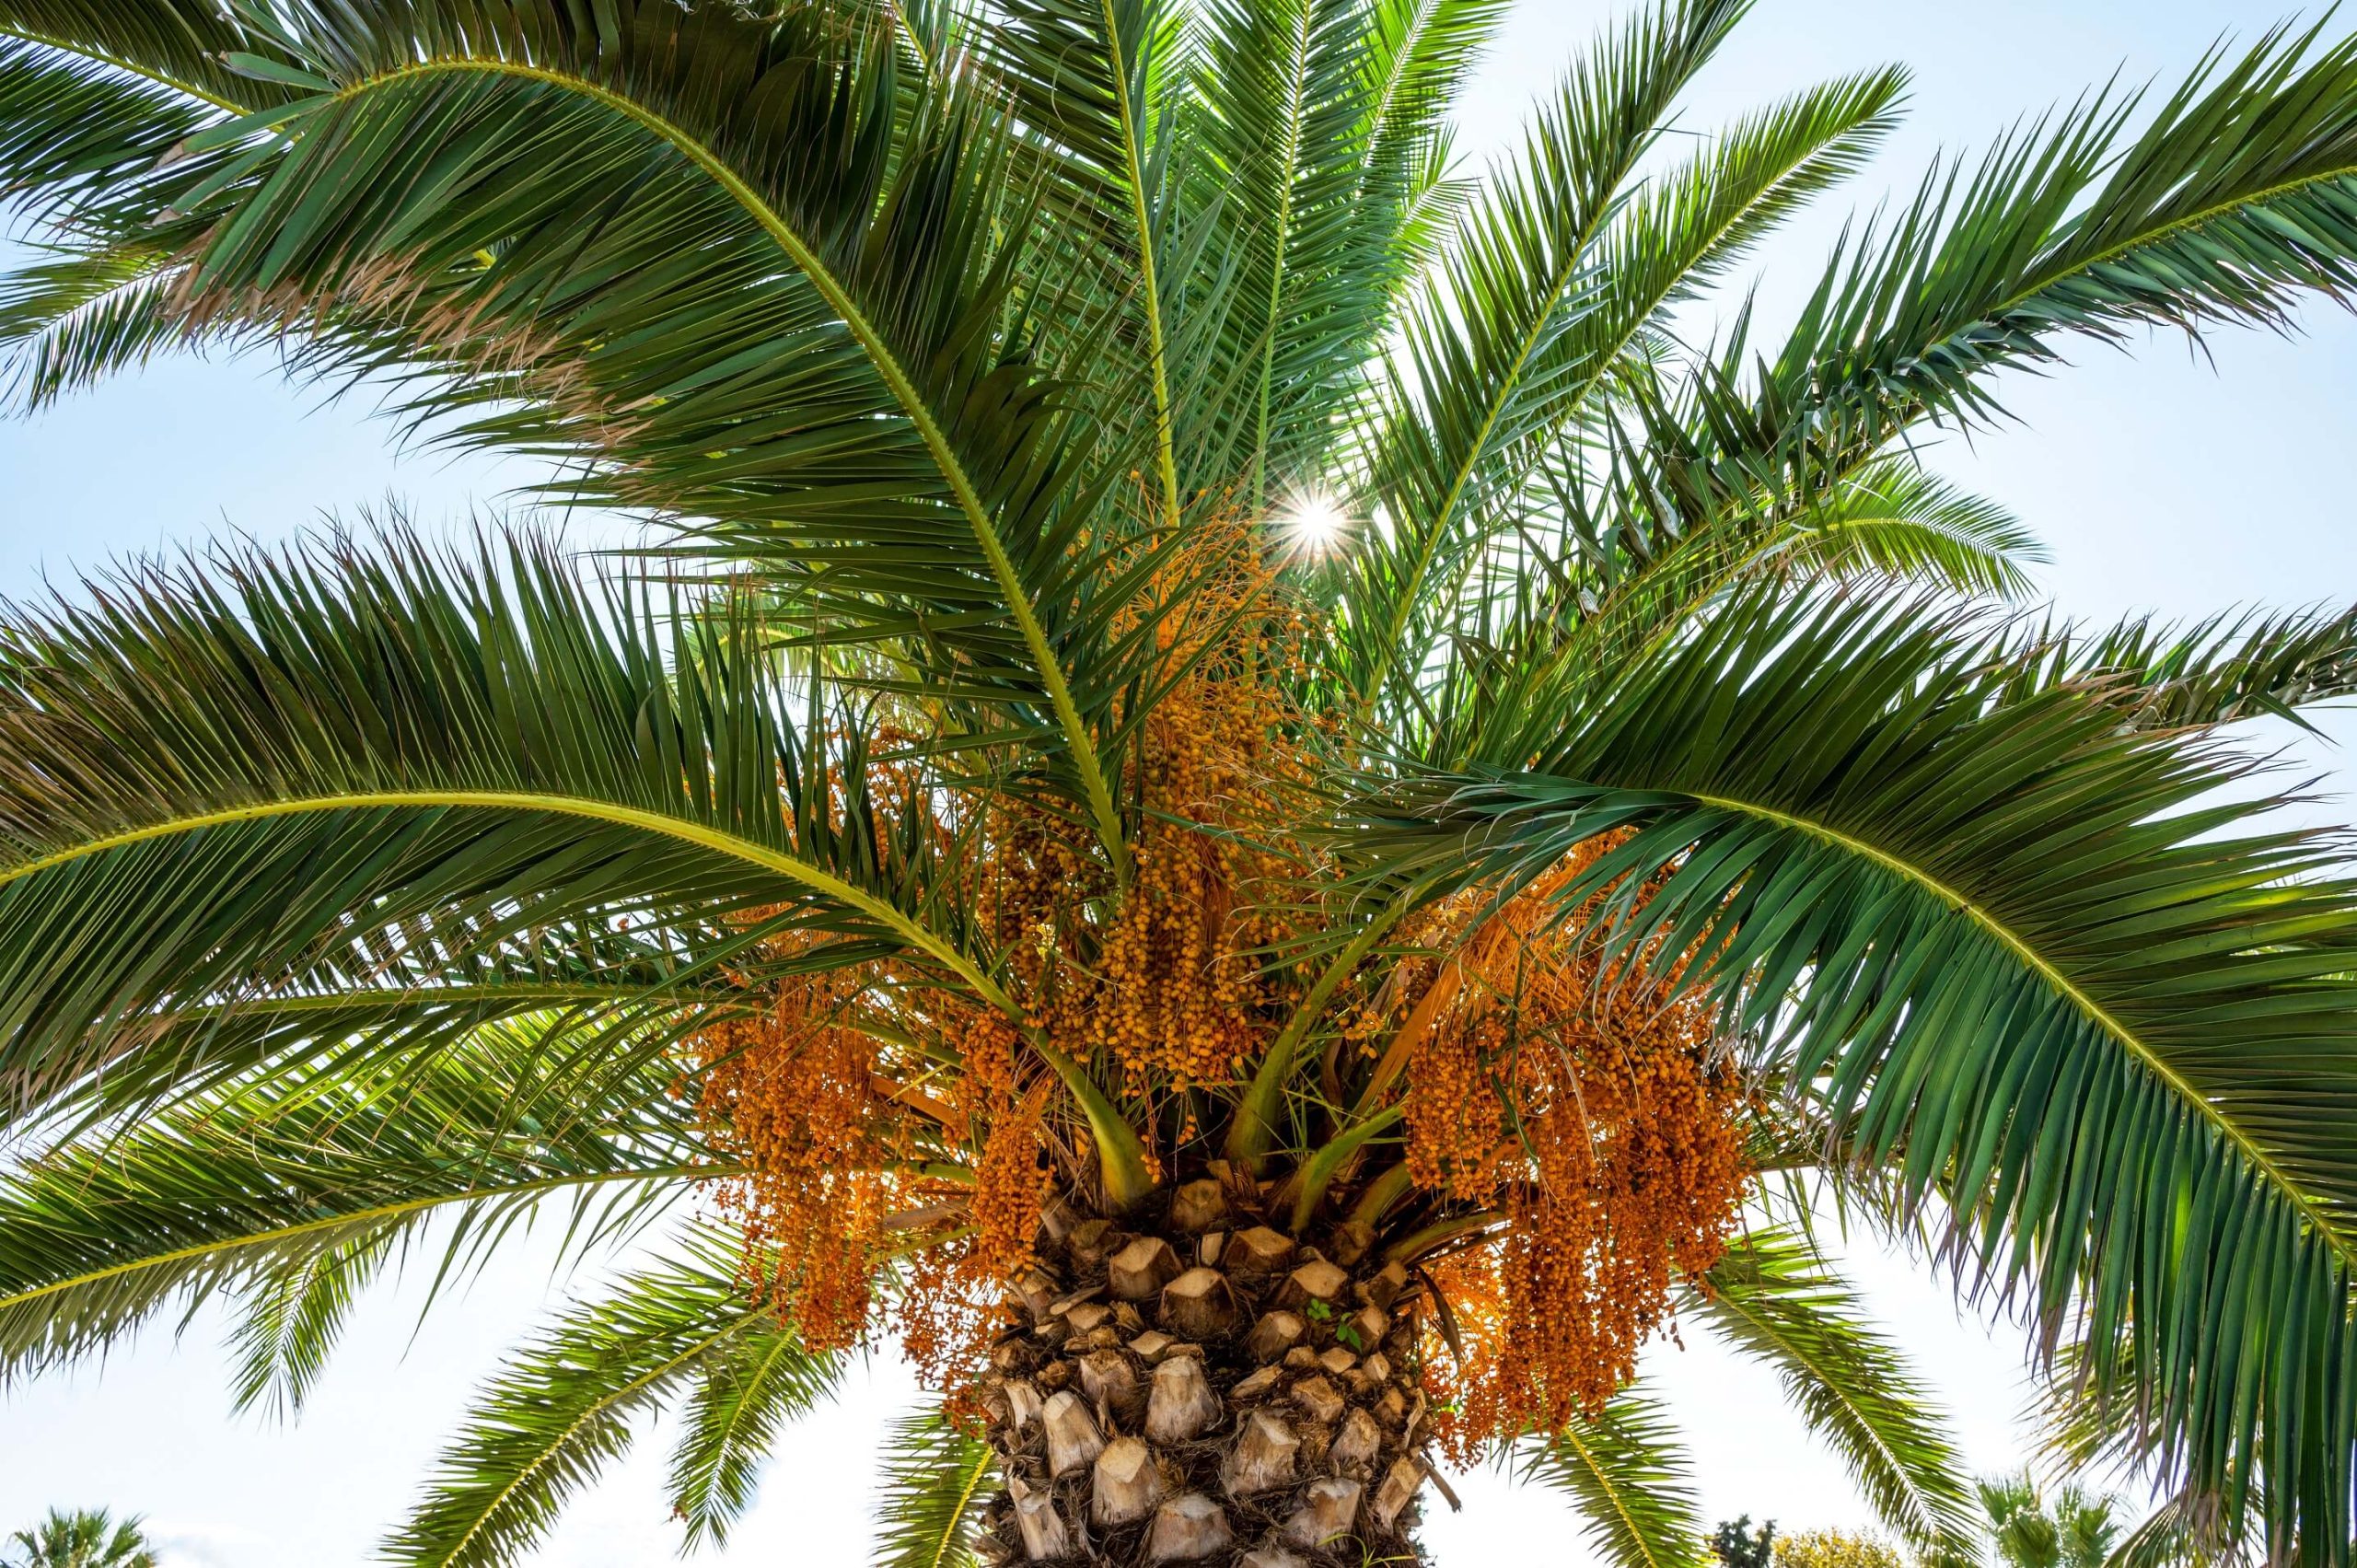 A photo of a palm tree